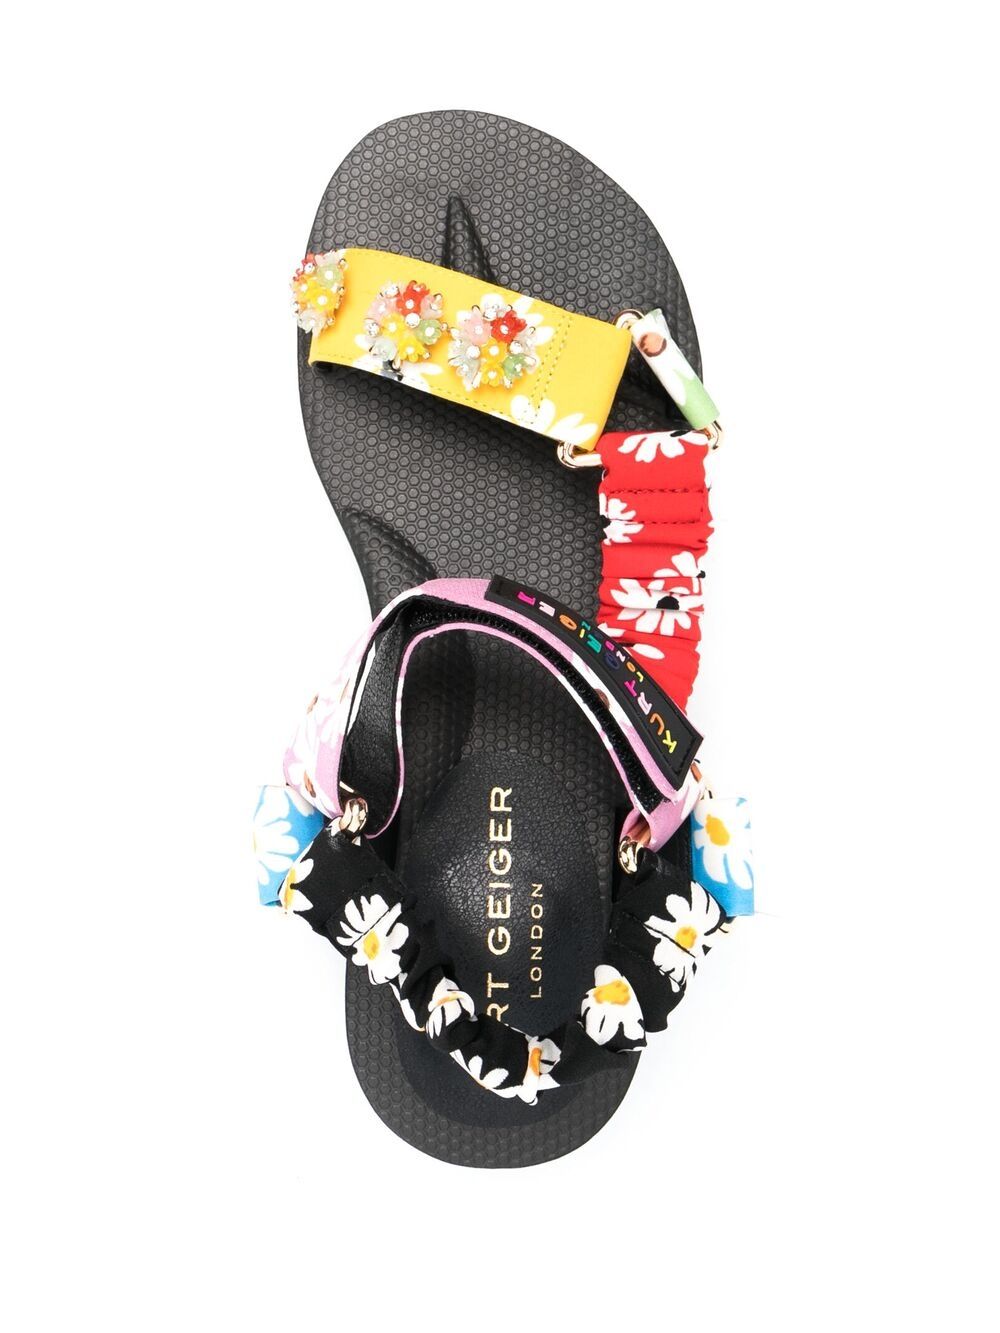 фото Kurt geiger london сандалии orion с цветочным декором